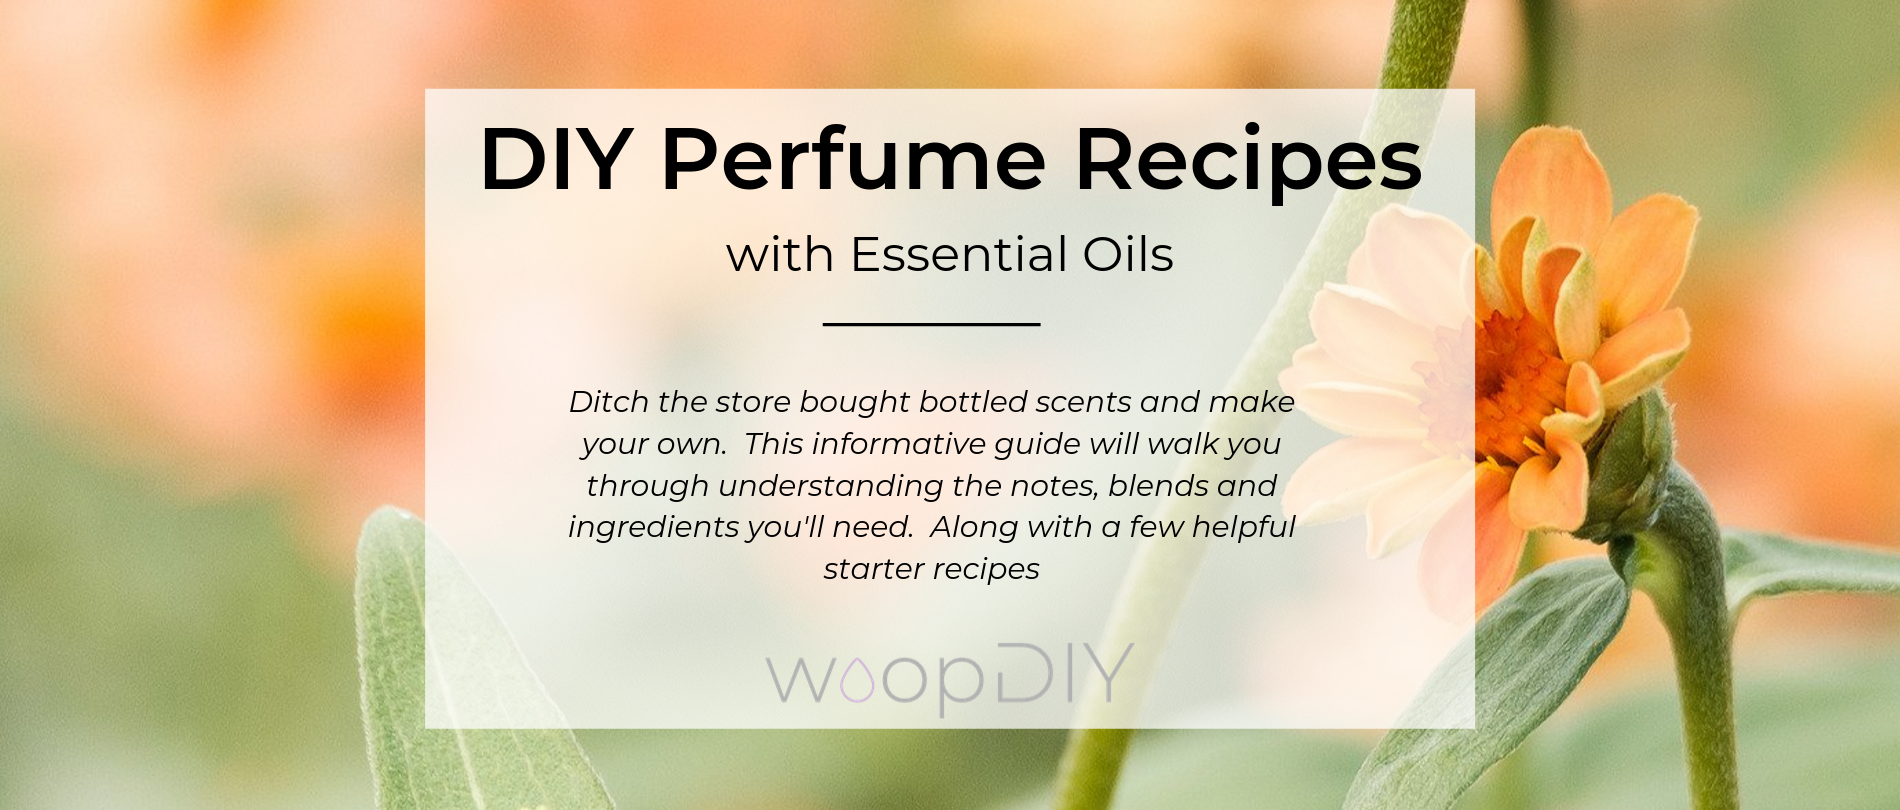 Inlay Porodit Zvratit How To Make Perfume From Essential Oil And Alcohol Petrguziana Cz